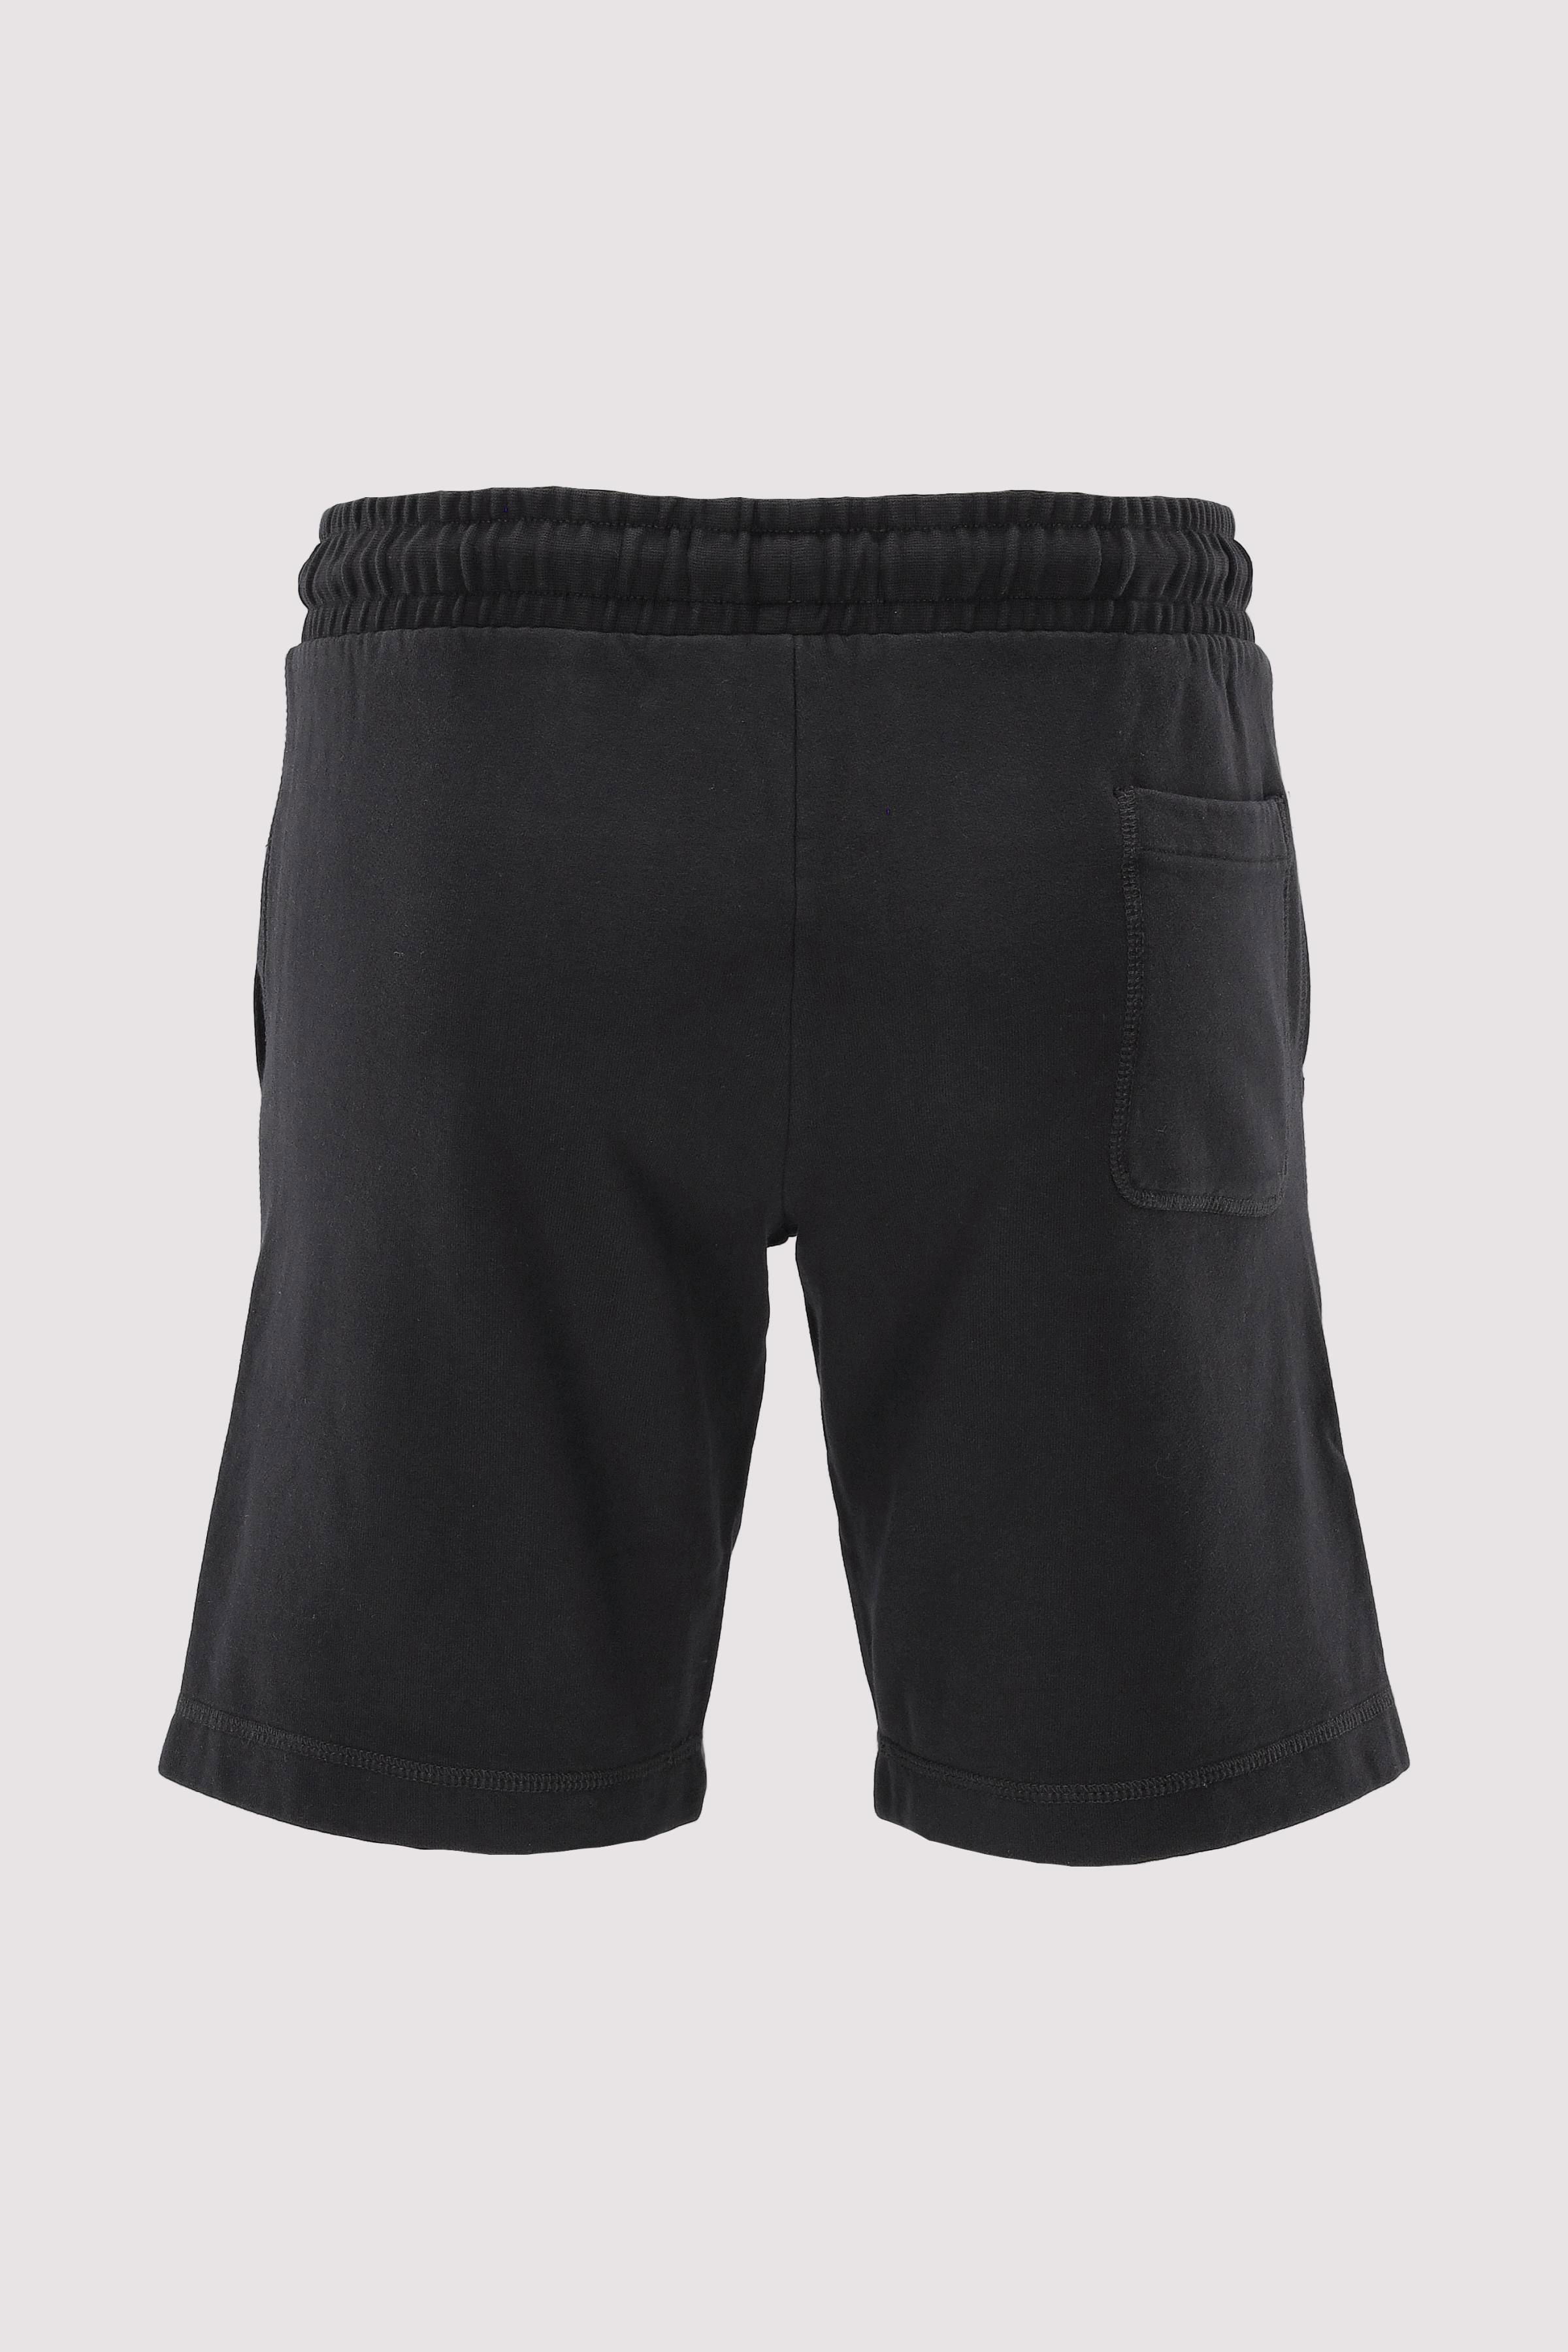 Shorts modern slub terry, flat